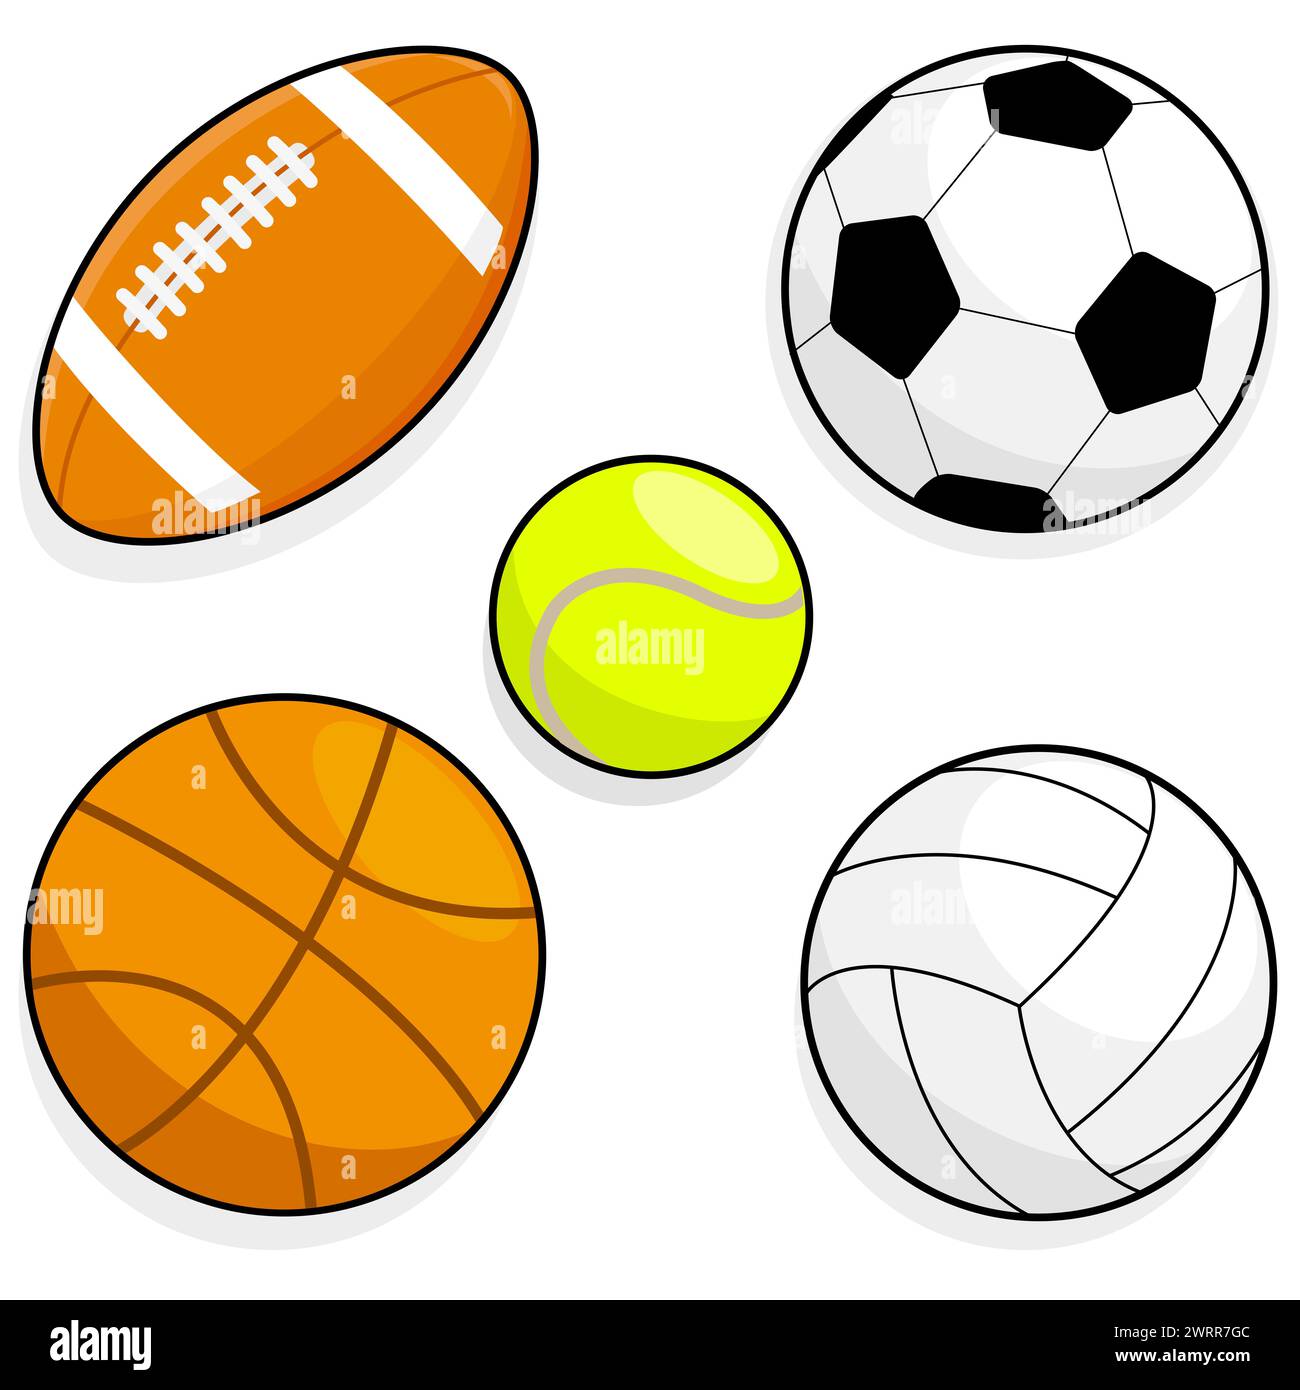 Ensemble de ballons de sport. Ballons de football, basket-ball, tennis, volley-ball et rugby. Collection d'illustrations Banque D'Images